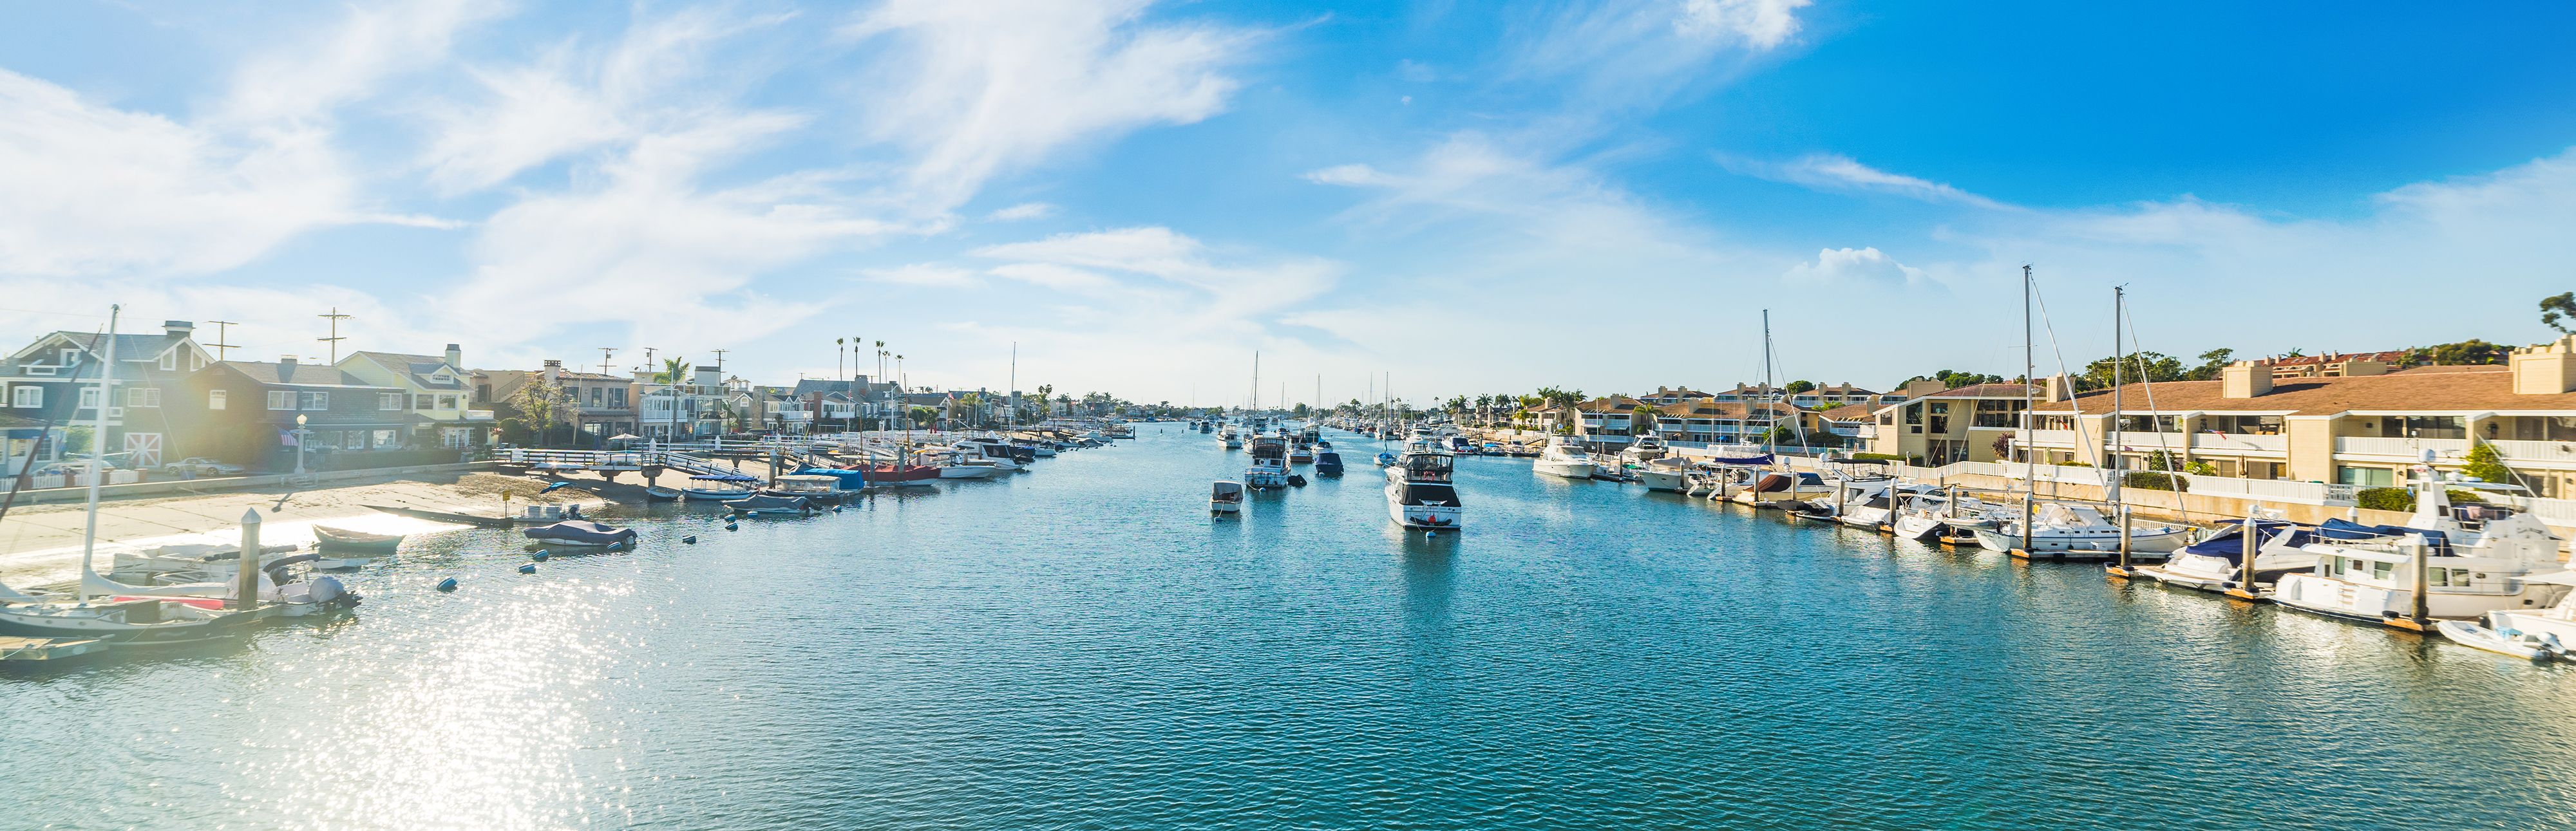 Boats in Balboa Island, Newport Beach, CA